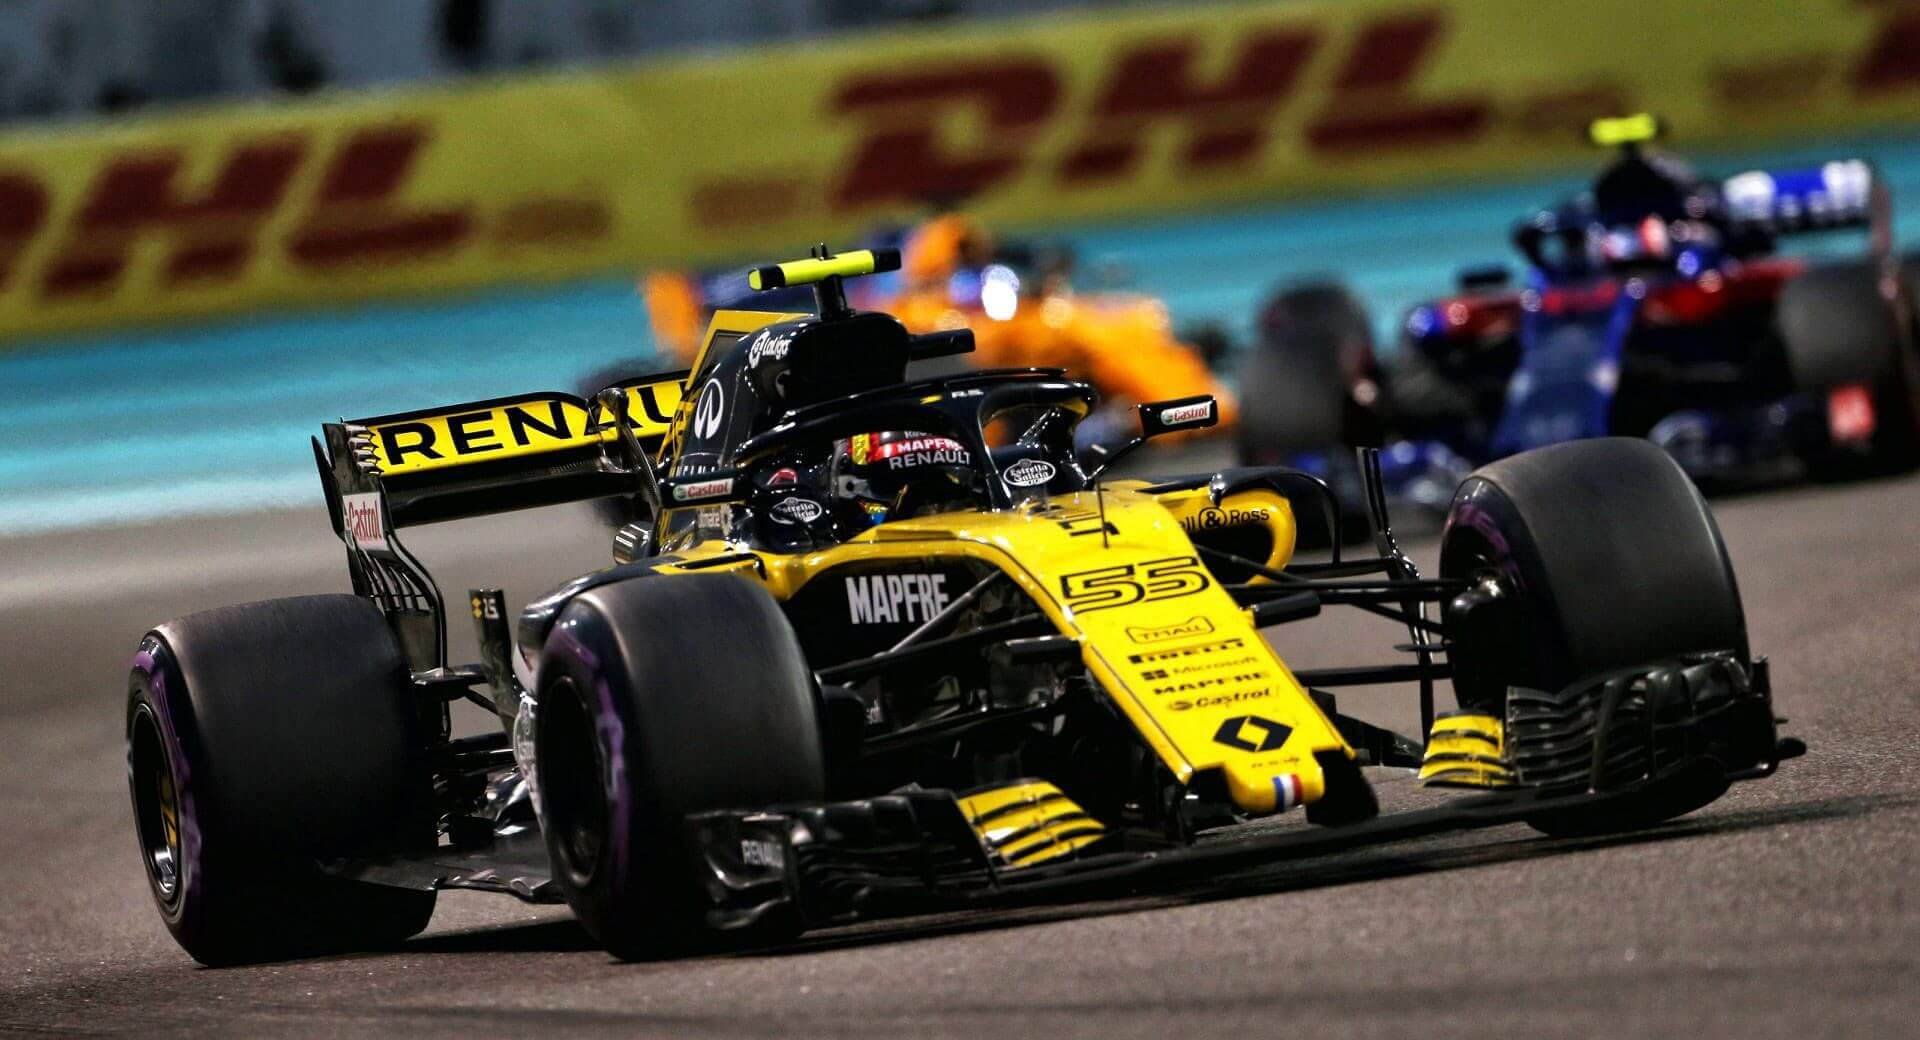 Renault f